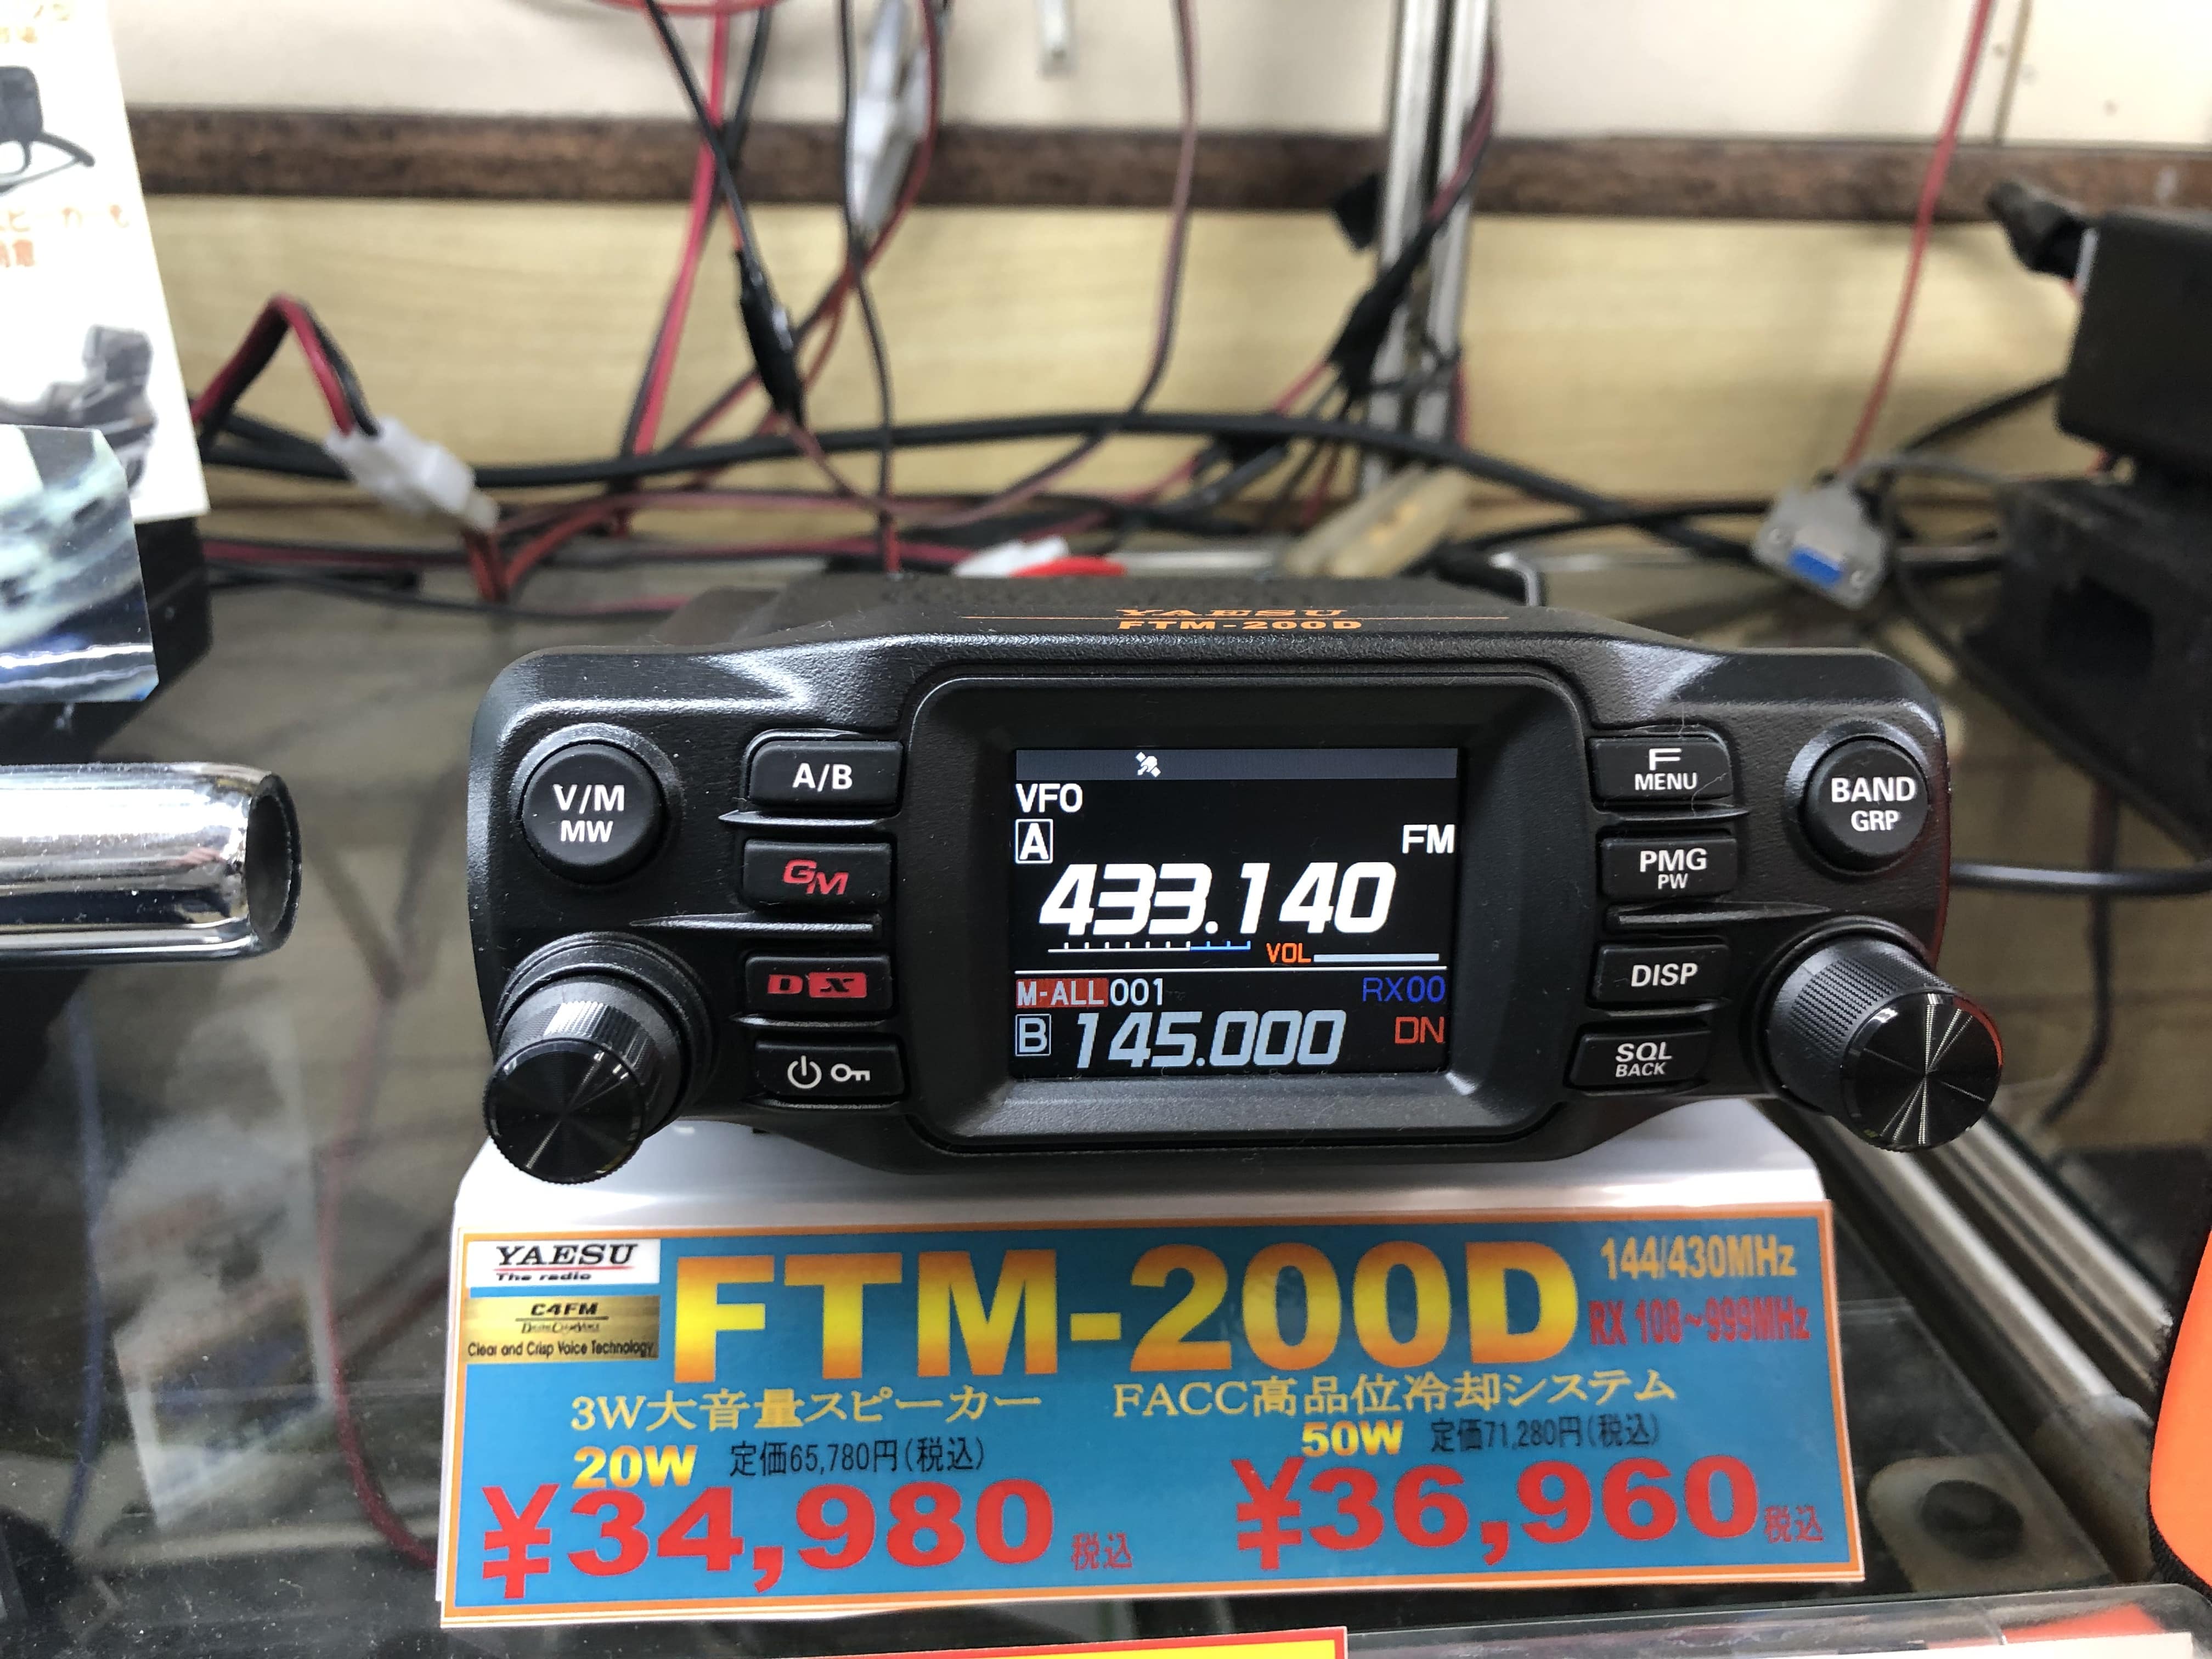 FTM-200D （50Ｗタイプ） C4FM FM 144 430MHz デュアルバンドデジタルトランシーバー - 2